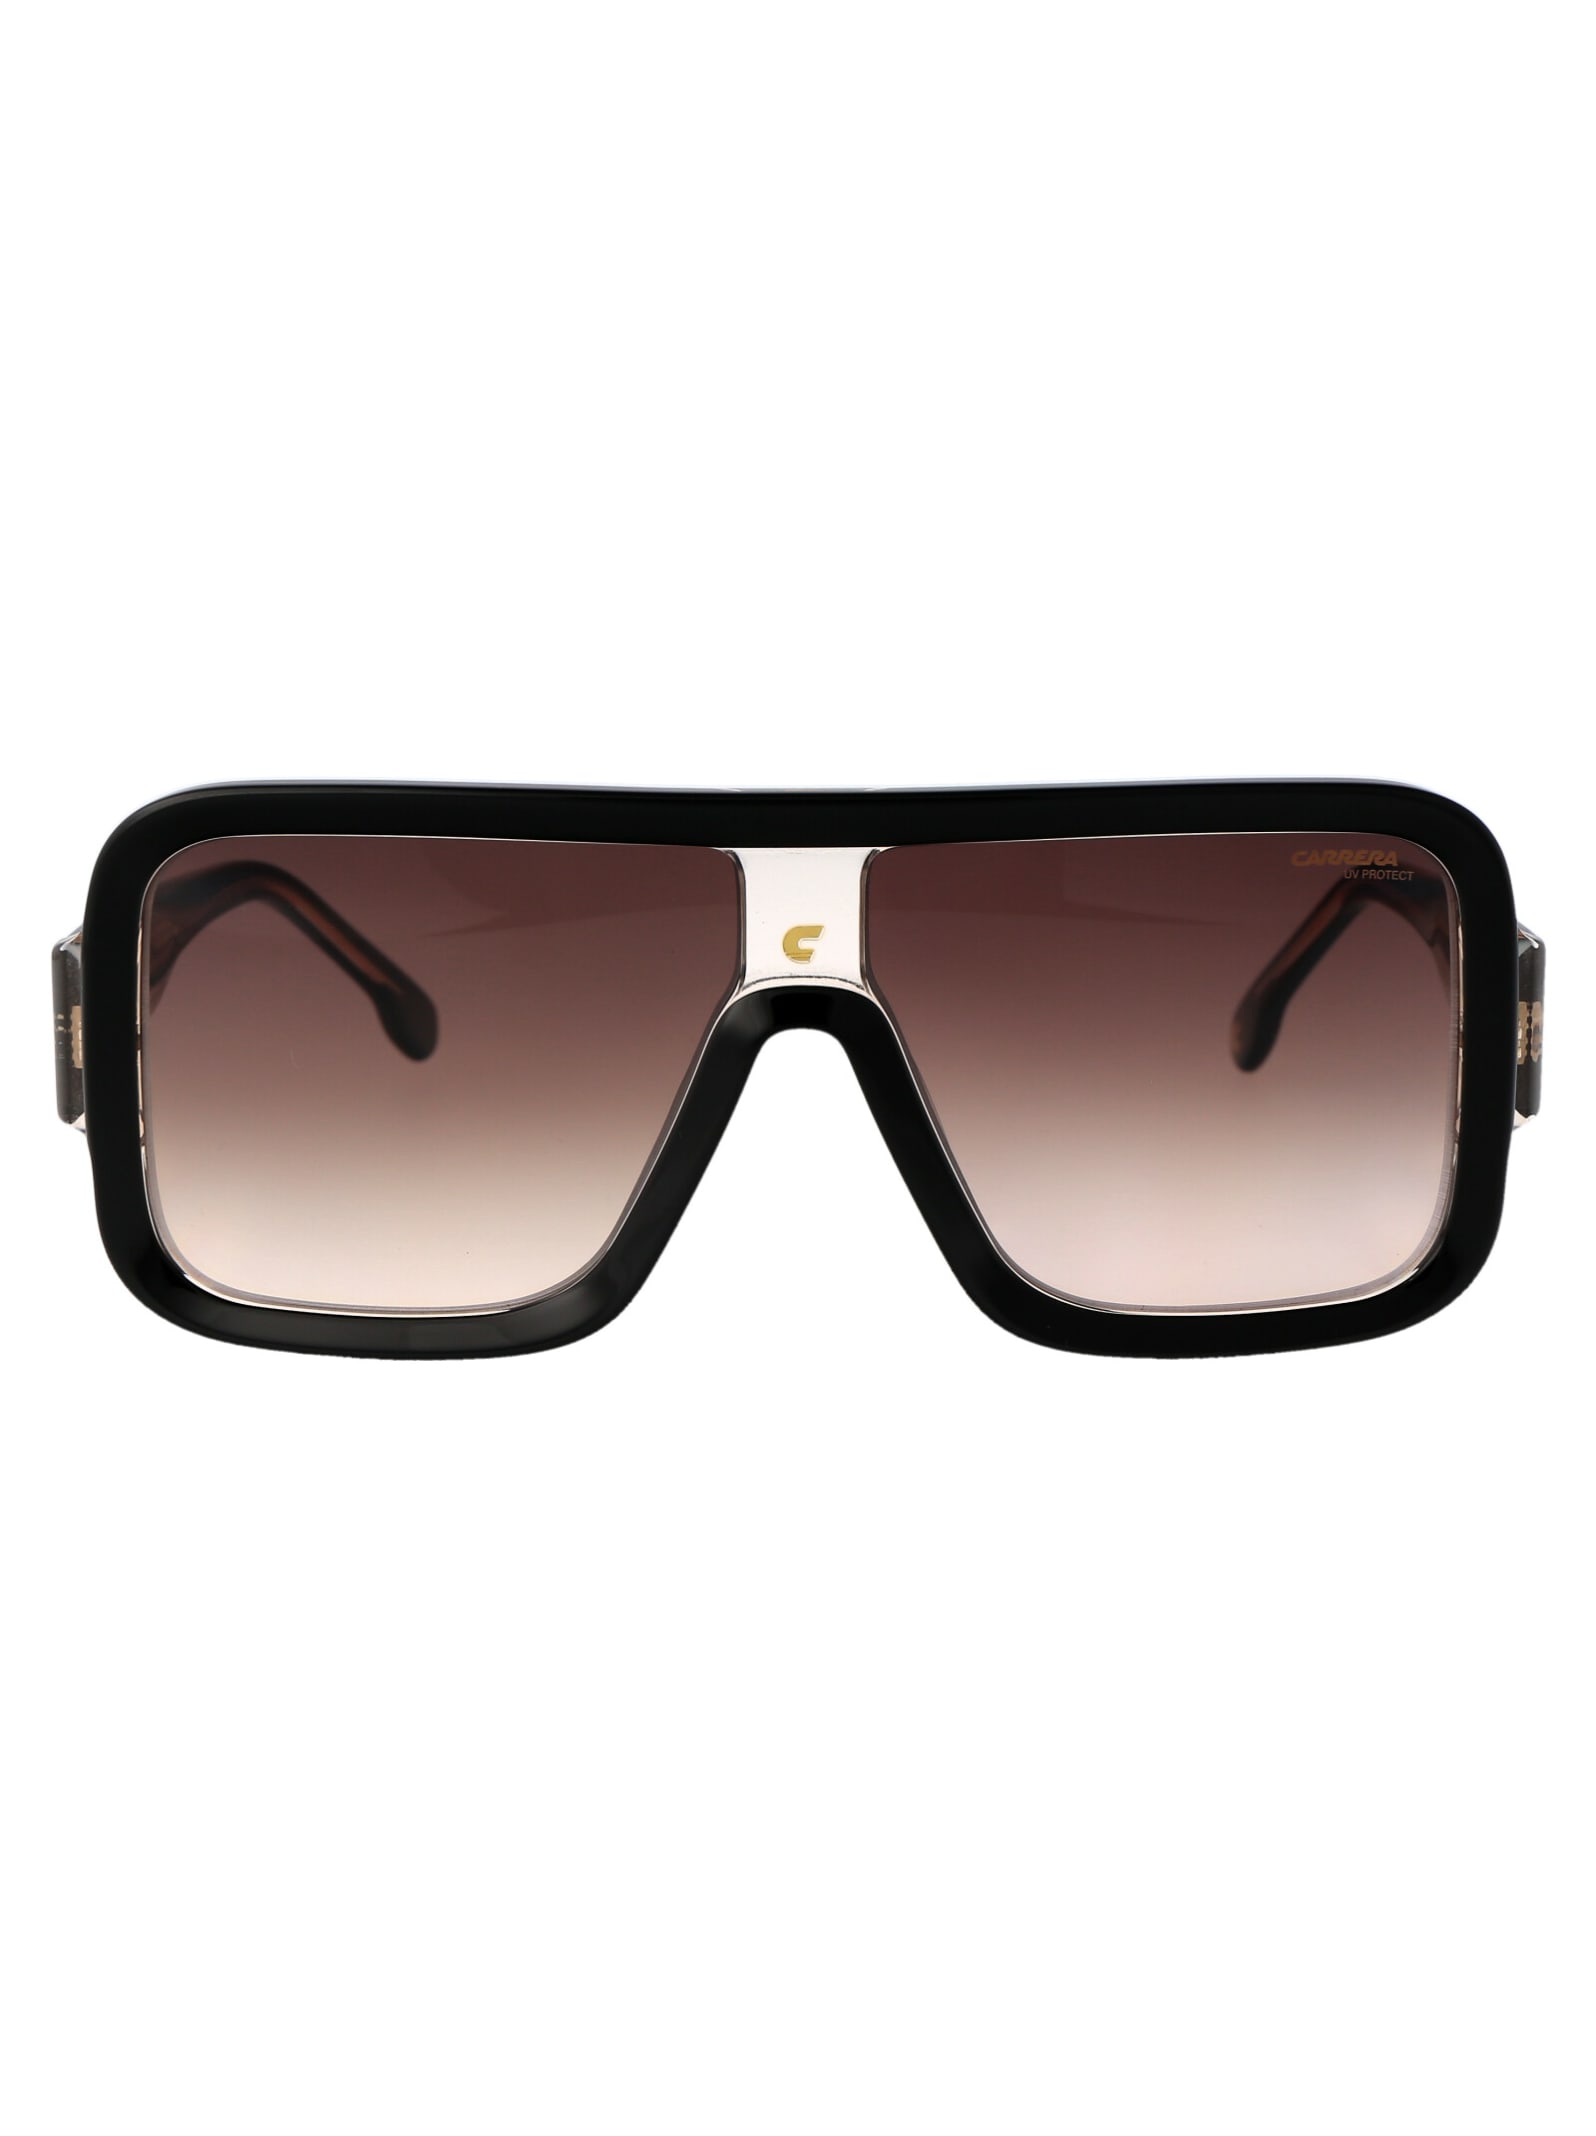 Carrera Flaglab 14 Sunglasses